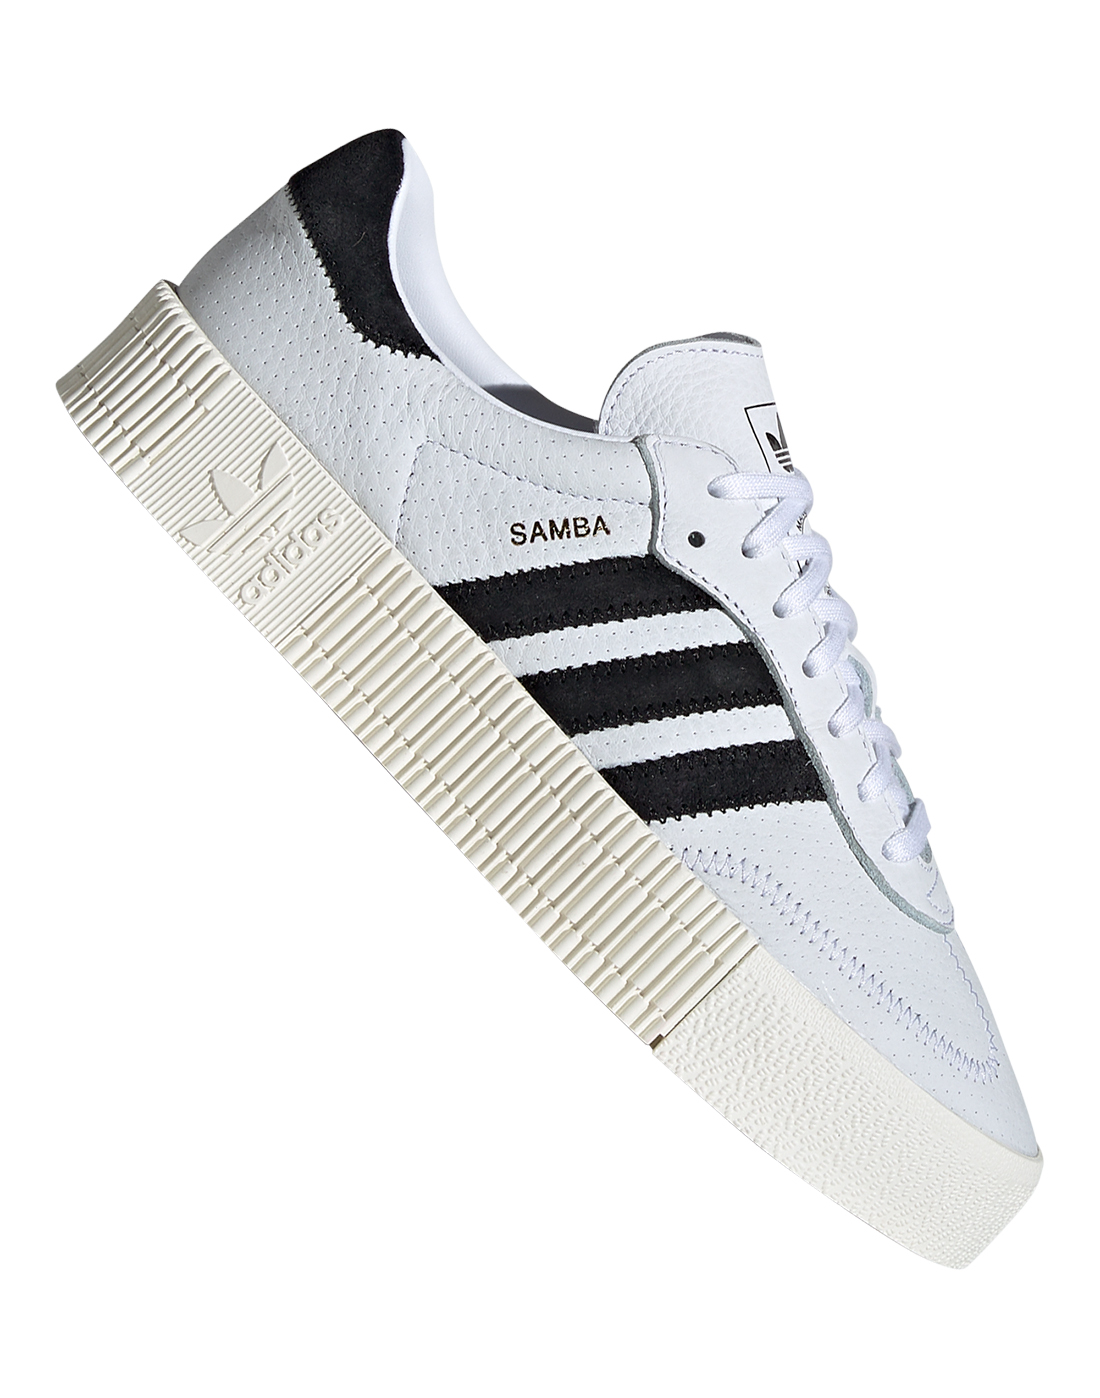 Белые адидас самба. Adidas Samba White. Adidas Originals Samba Rose. Адидас Самба с белой подошвой. Adidas Samba белые.